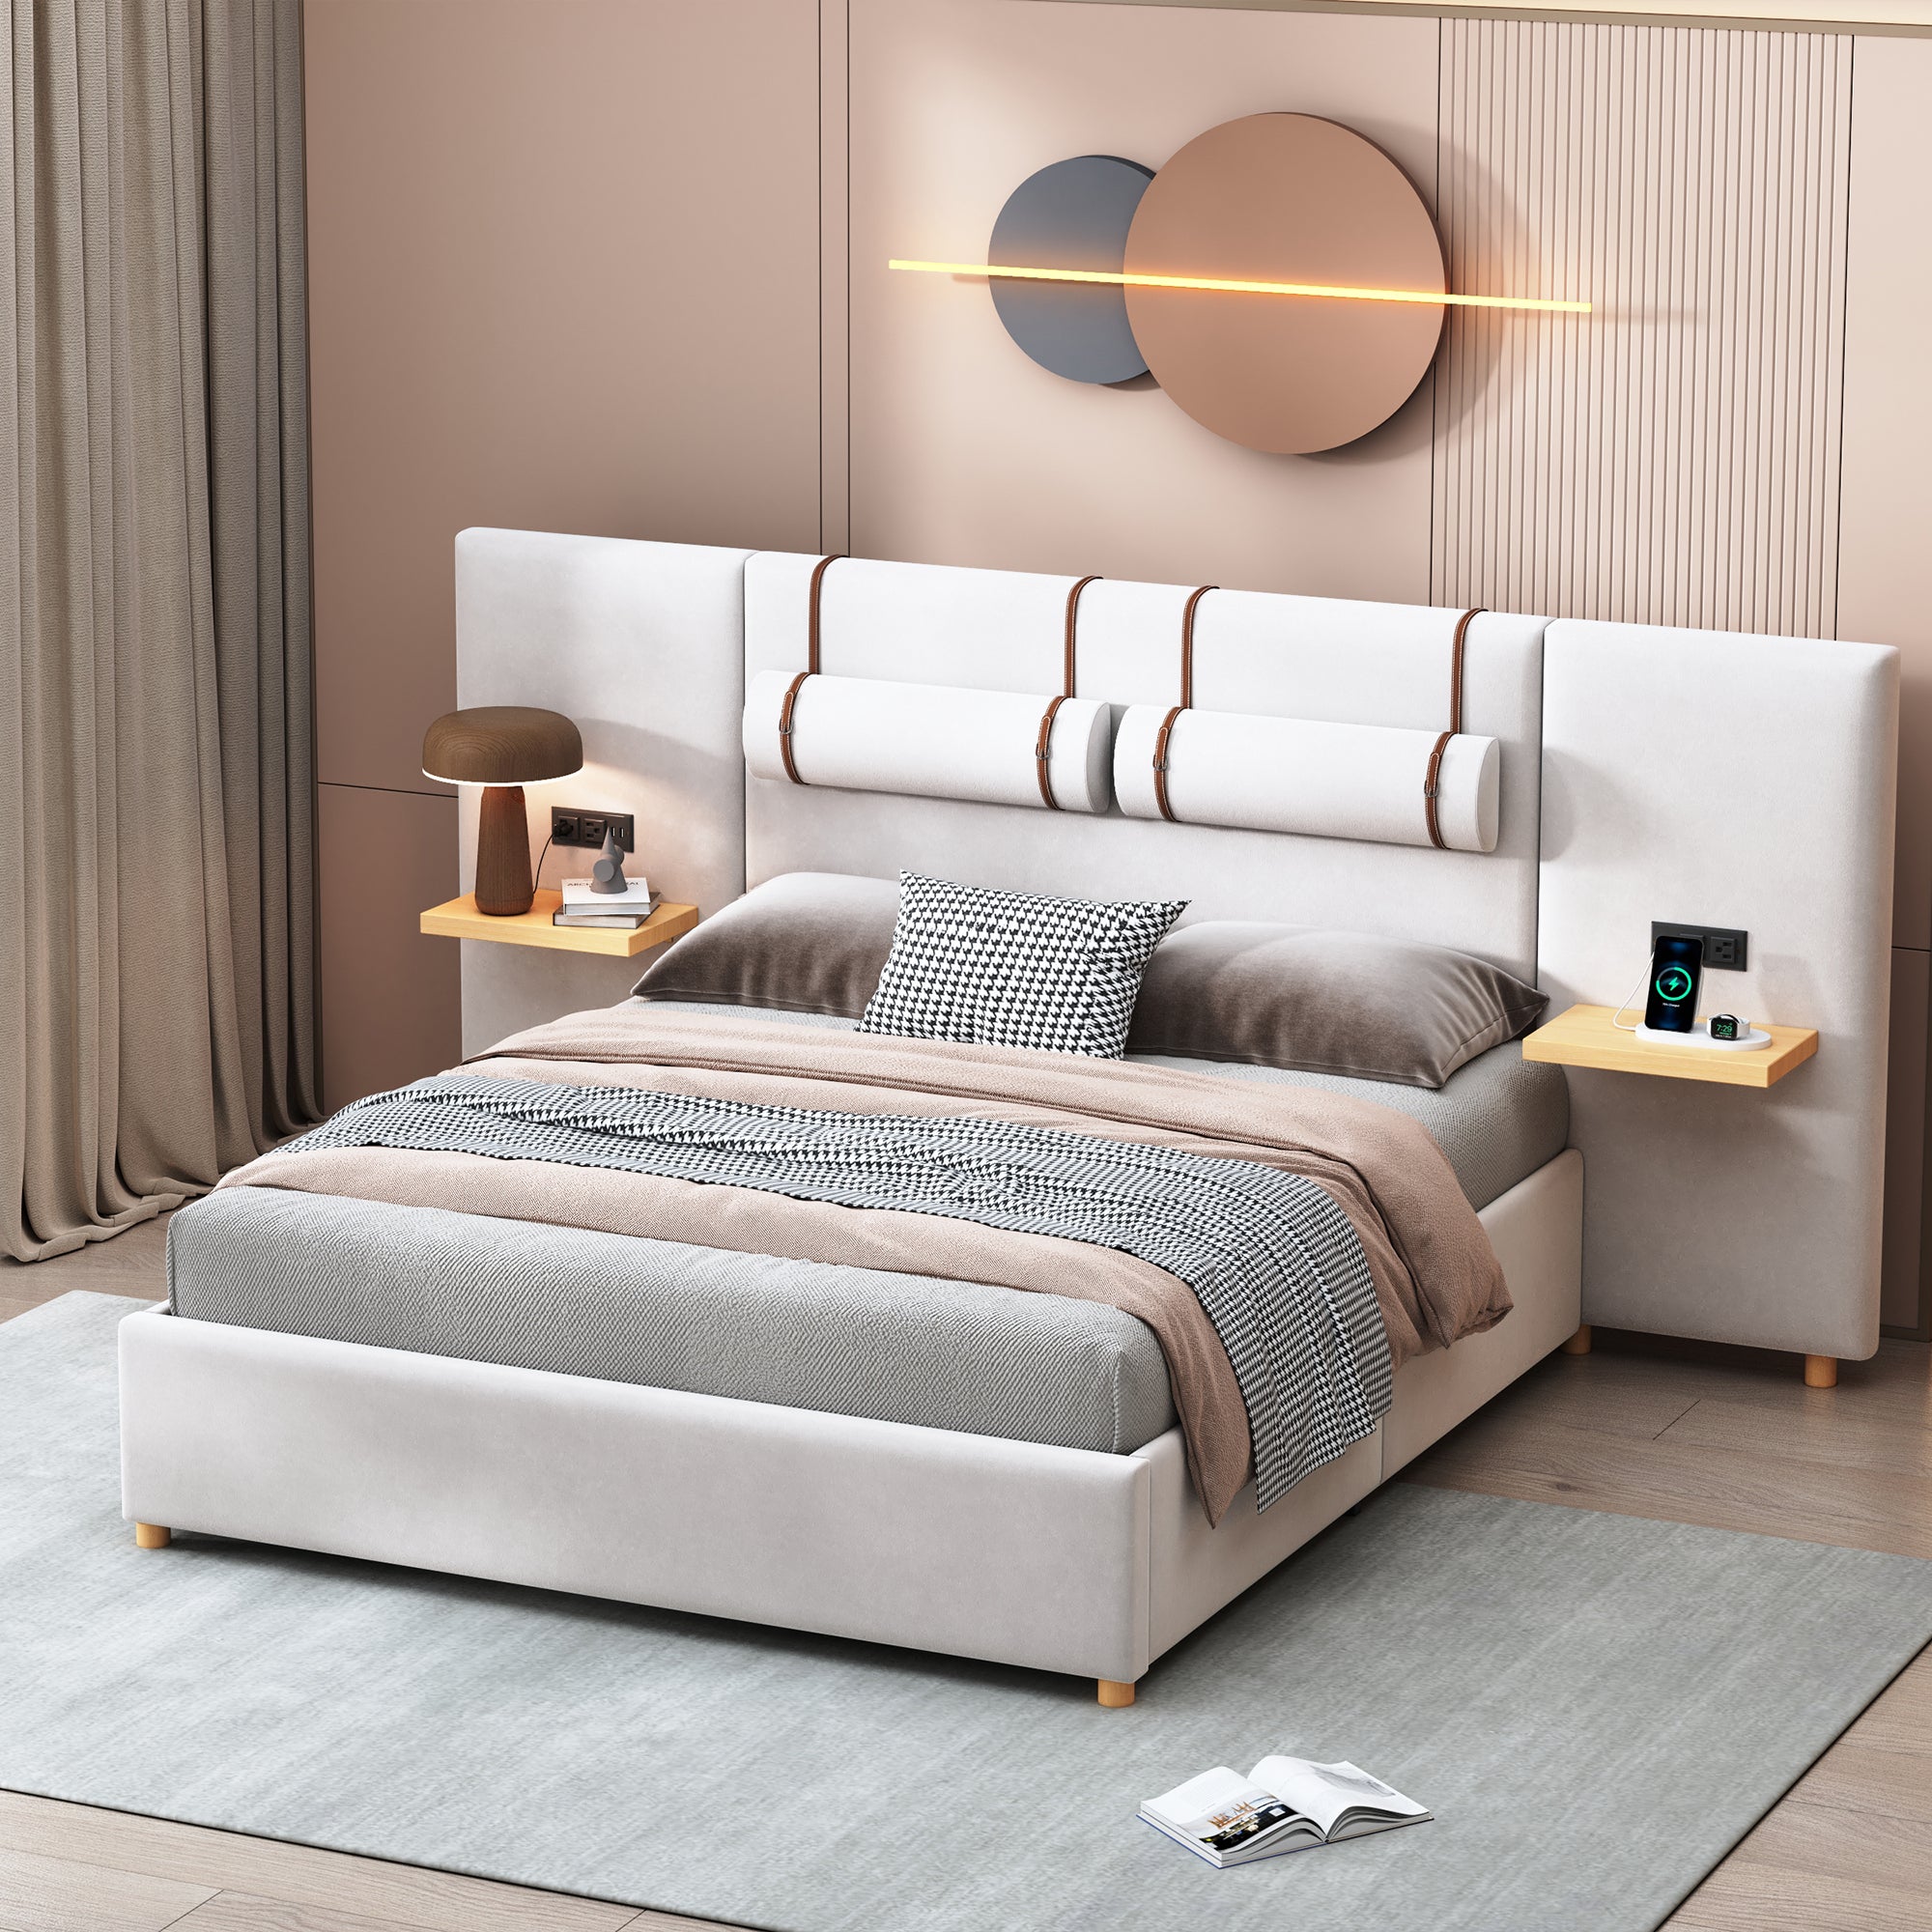 Queen Size Upholstered Platform Bed, Two Outlets and USB Charging Ports on Both Sides, Two Bedside Pillows, Storage Shelves,Velvet, Beige